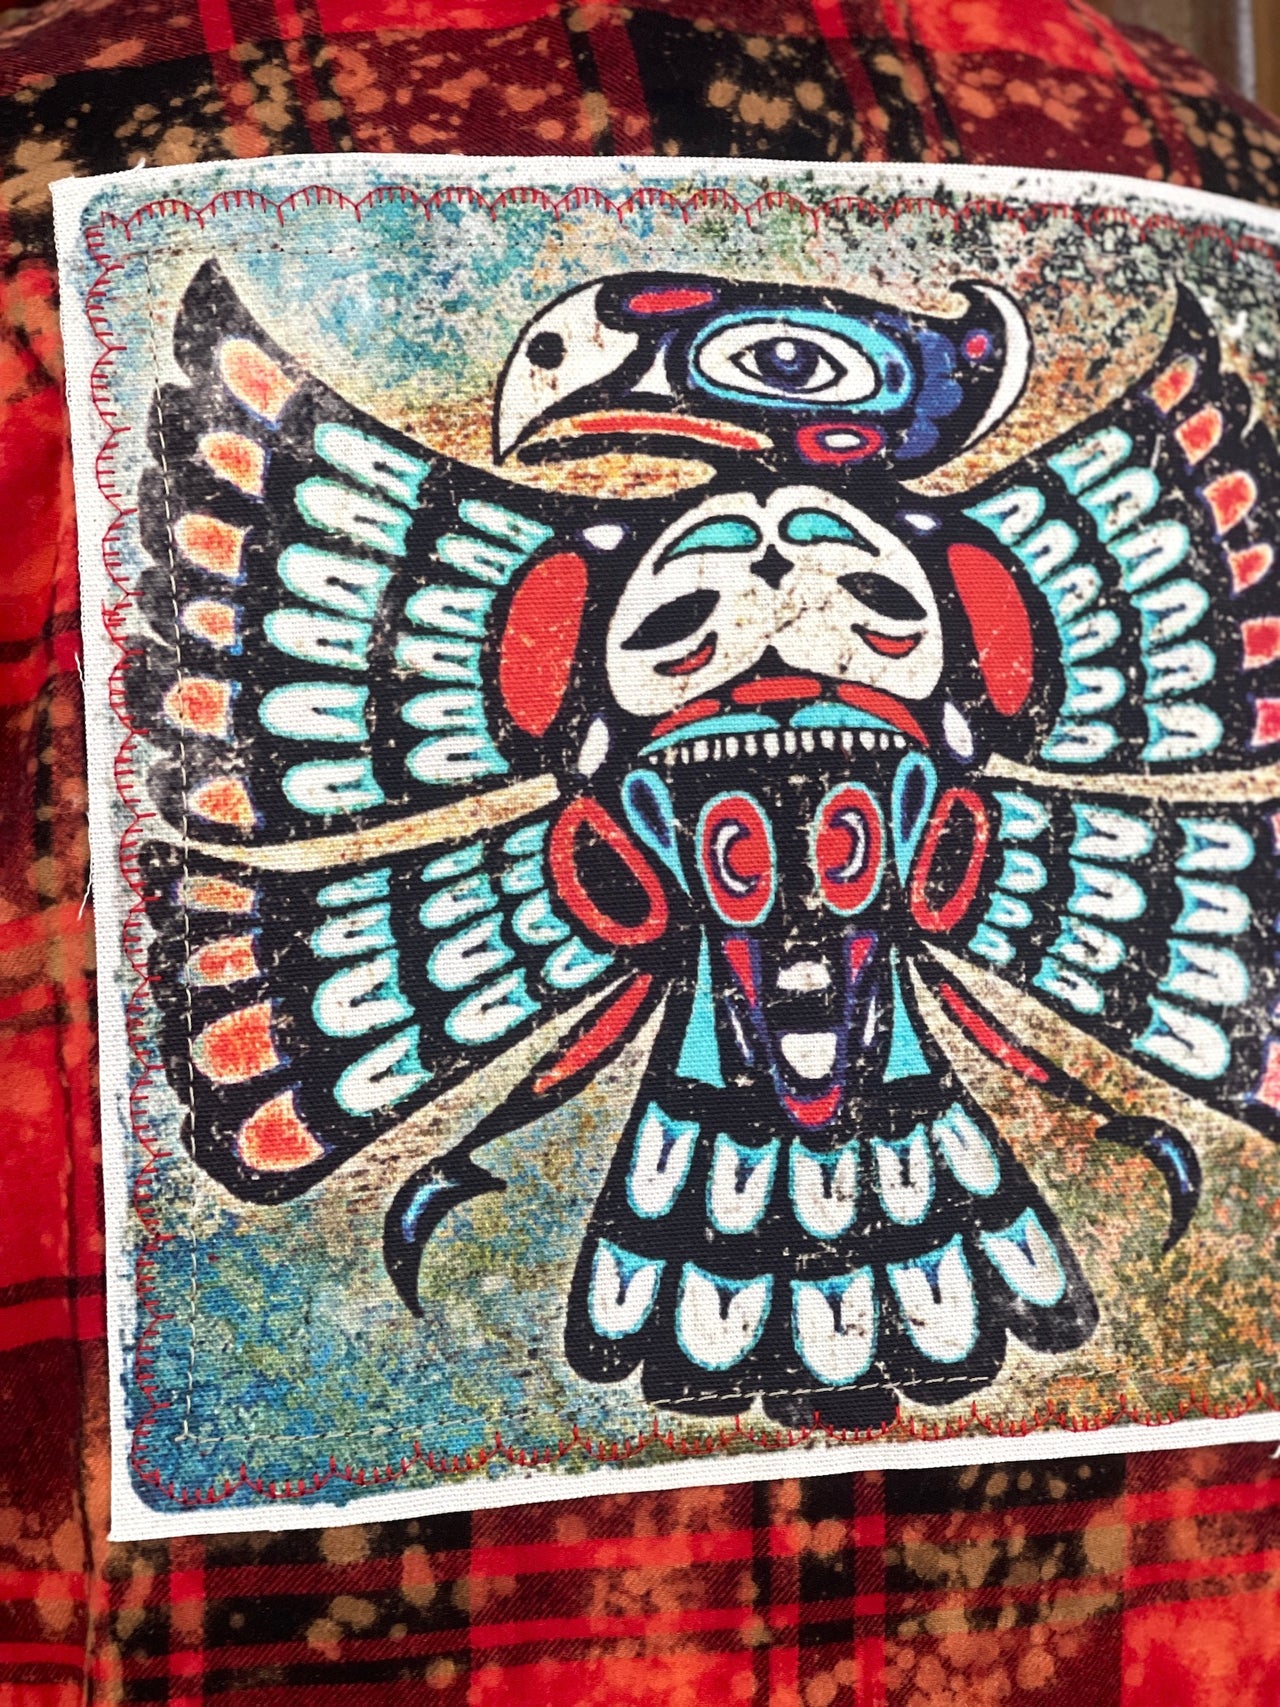 Thunderbird Art Flannel- Distressed Red Plaid